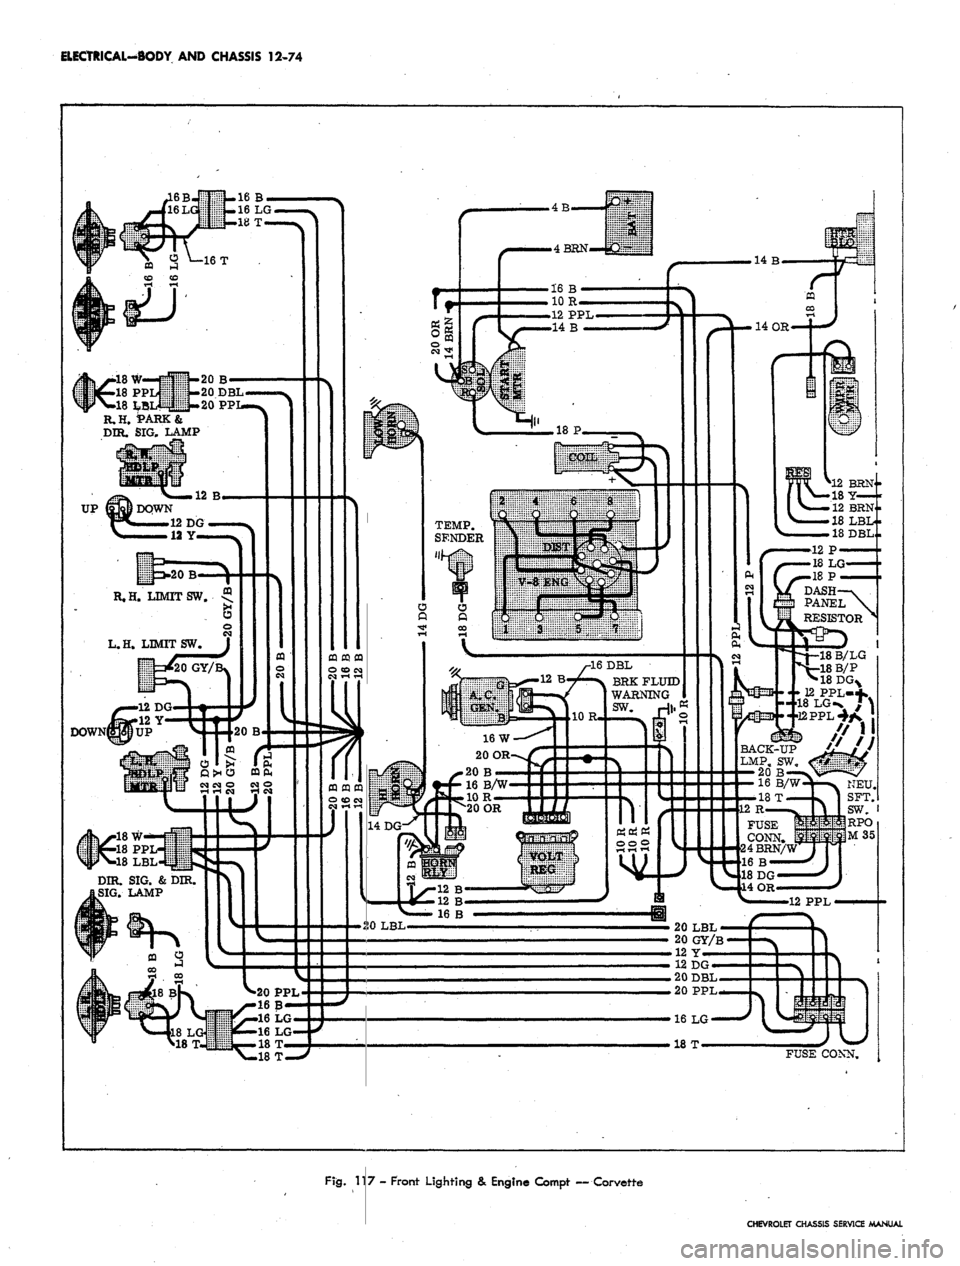 CHEVROLET CAMARO 1967 1.G Chassis Workshop Manual 
ELECTRICAL-BODY AND CHASSIS 12-74

R.H. PARK&

DIR. SIG. LAMP

\L2 BRNf

18 Y—

12 BRN

18 LBL4-

18DBL

12 P

18 LG

18 P

DASH

PANEL

RESISTOR
TEMP.

SENDER

R.H. LIMIT SW.

L.H. LIMIT SW.

GY/B